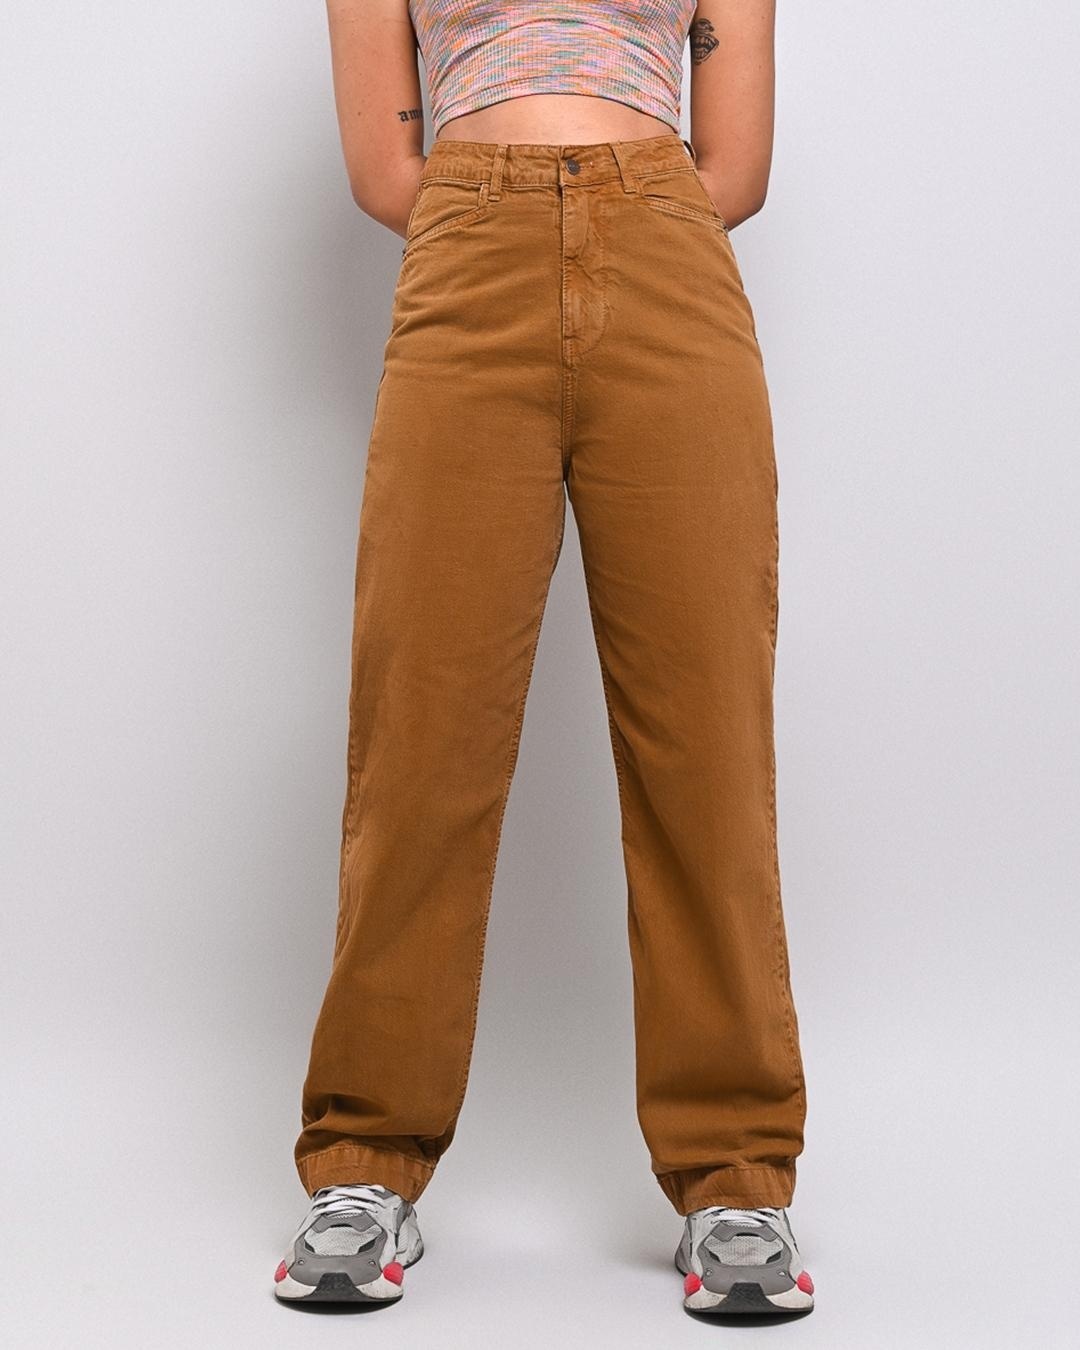 Spykar Coffee Brown Cotton Slim Fit Narrow Length Jeans For Men (Skinny) -  skn02bb20coffeebrown